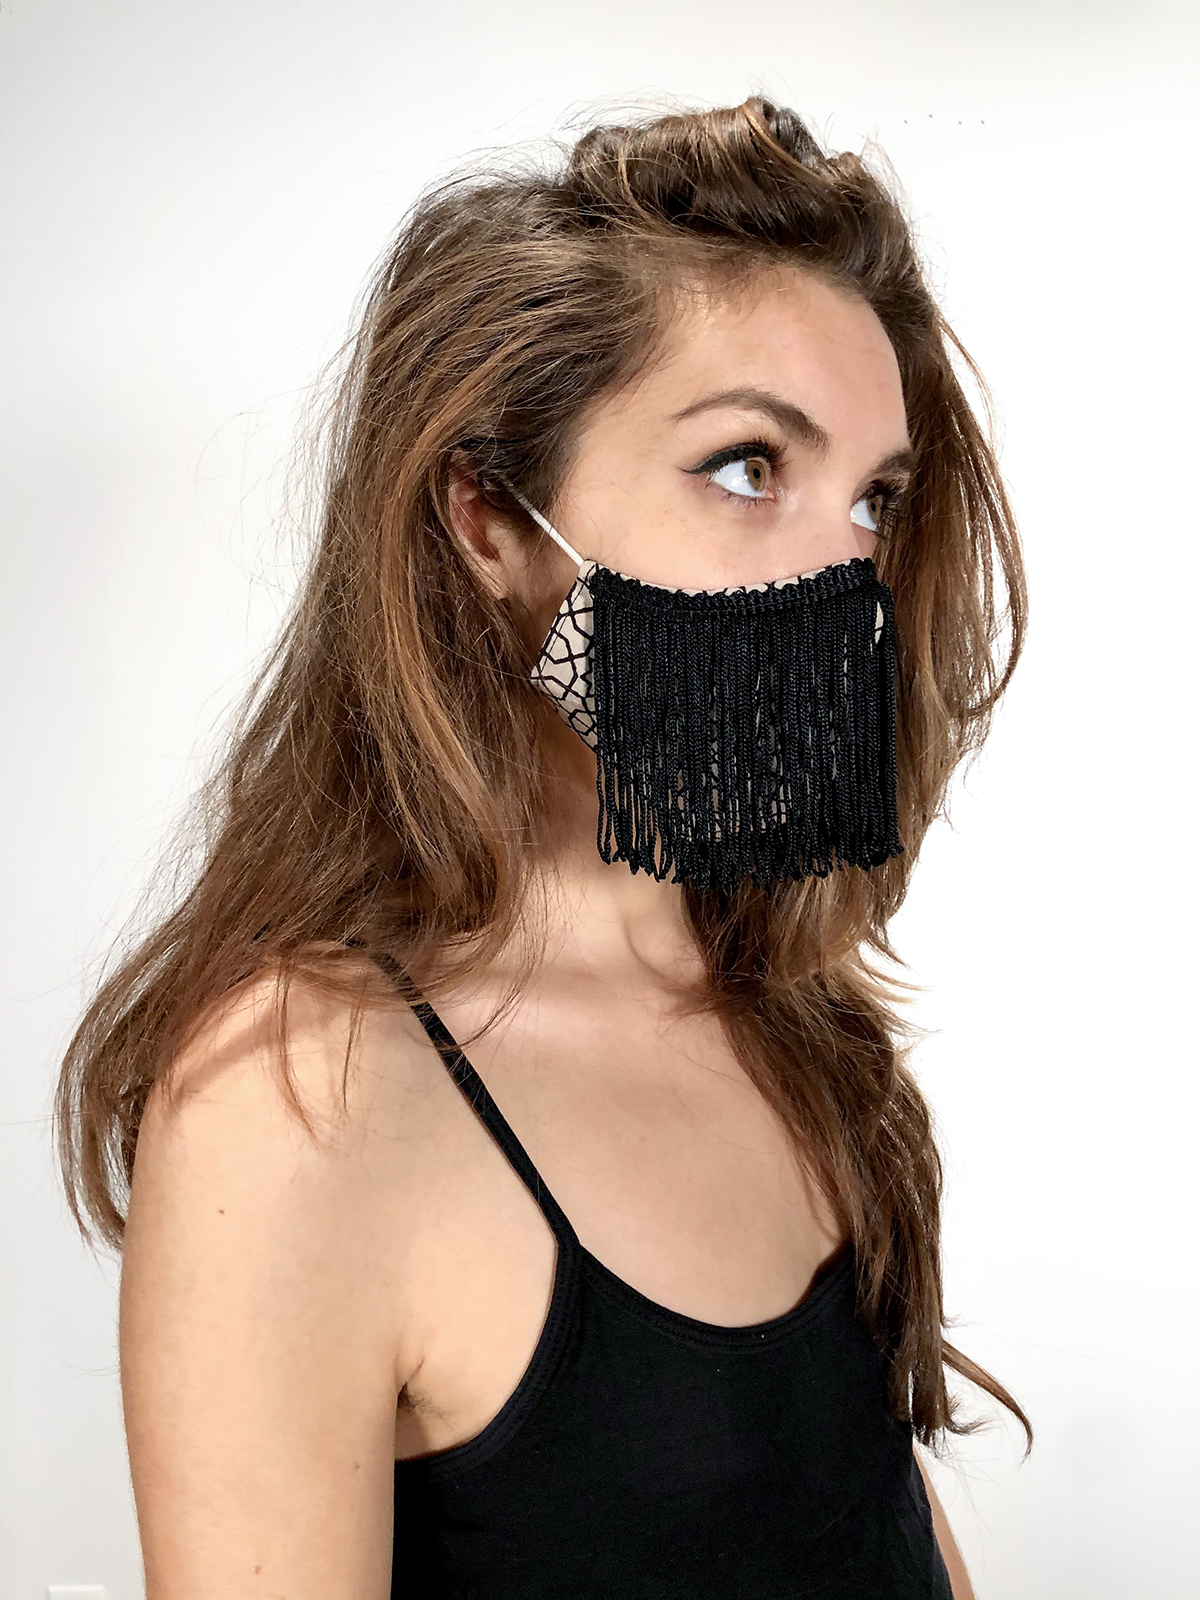 Face covering mask with Black fringe on female model